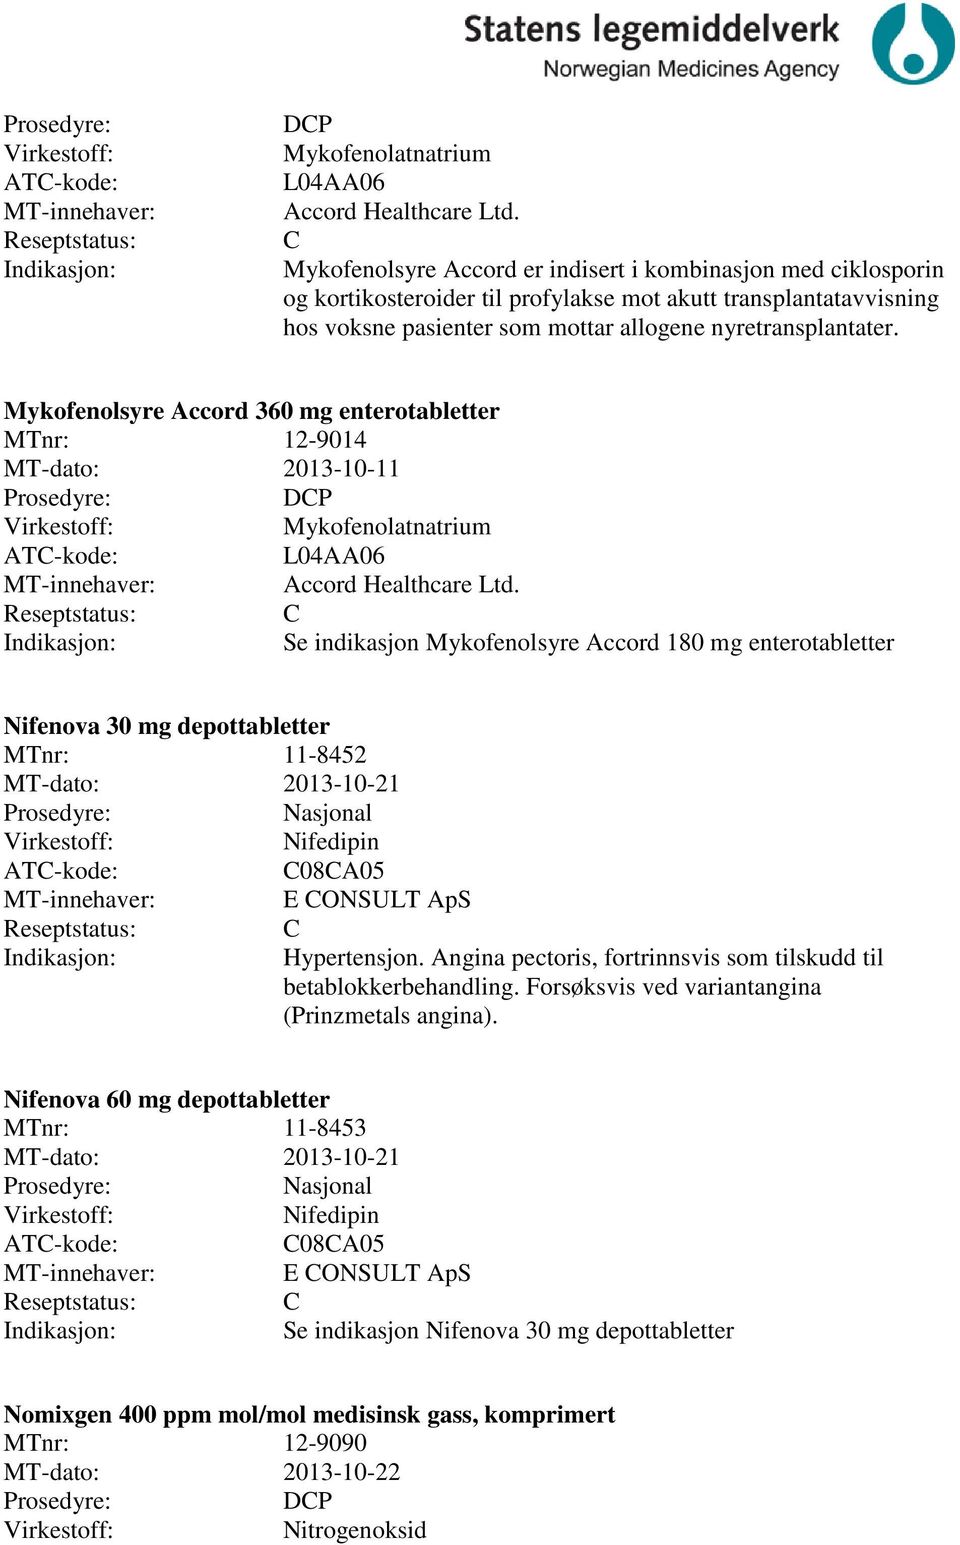 Mykofenolsyre Accord 360 mg enterotabletter 12-9014 MT-dato: 2013-10-11  Se indikasjon Mykofenolsyre Accord 180 mg enterotabletter Nifenova 30 mg depottabletter 11-8452 MT-dato: 2013-10-21 Nifedipin